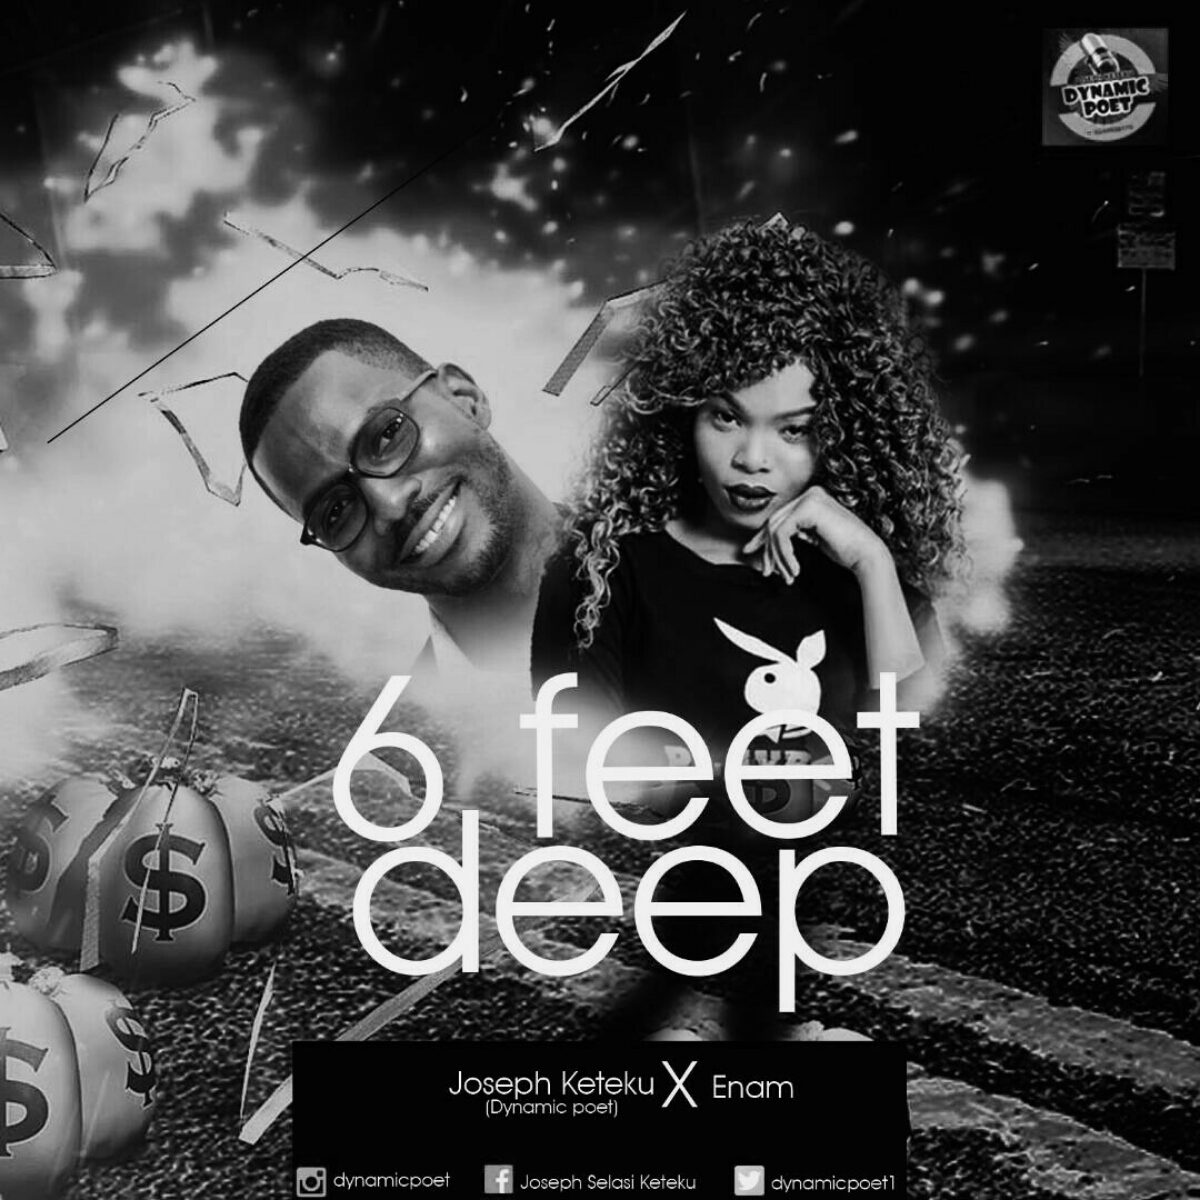 Audio/Poem: Joseph Keteku X Enam – 6 Feet Deep